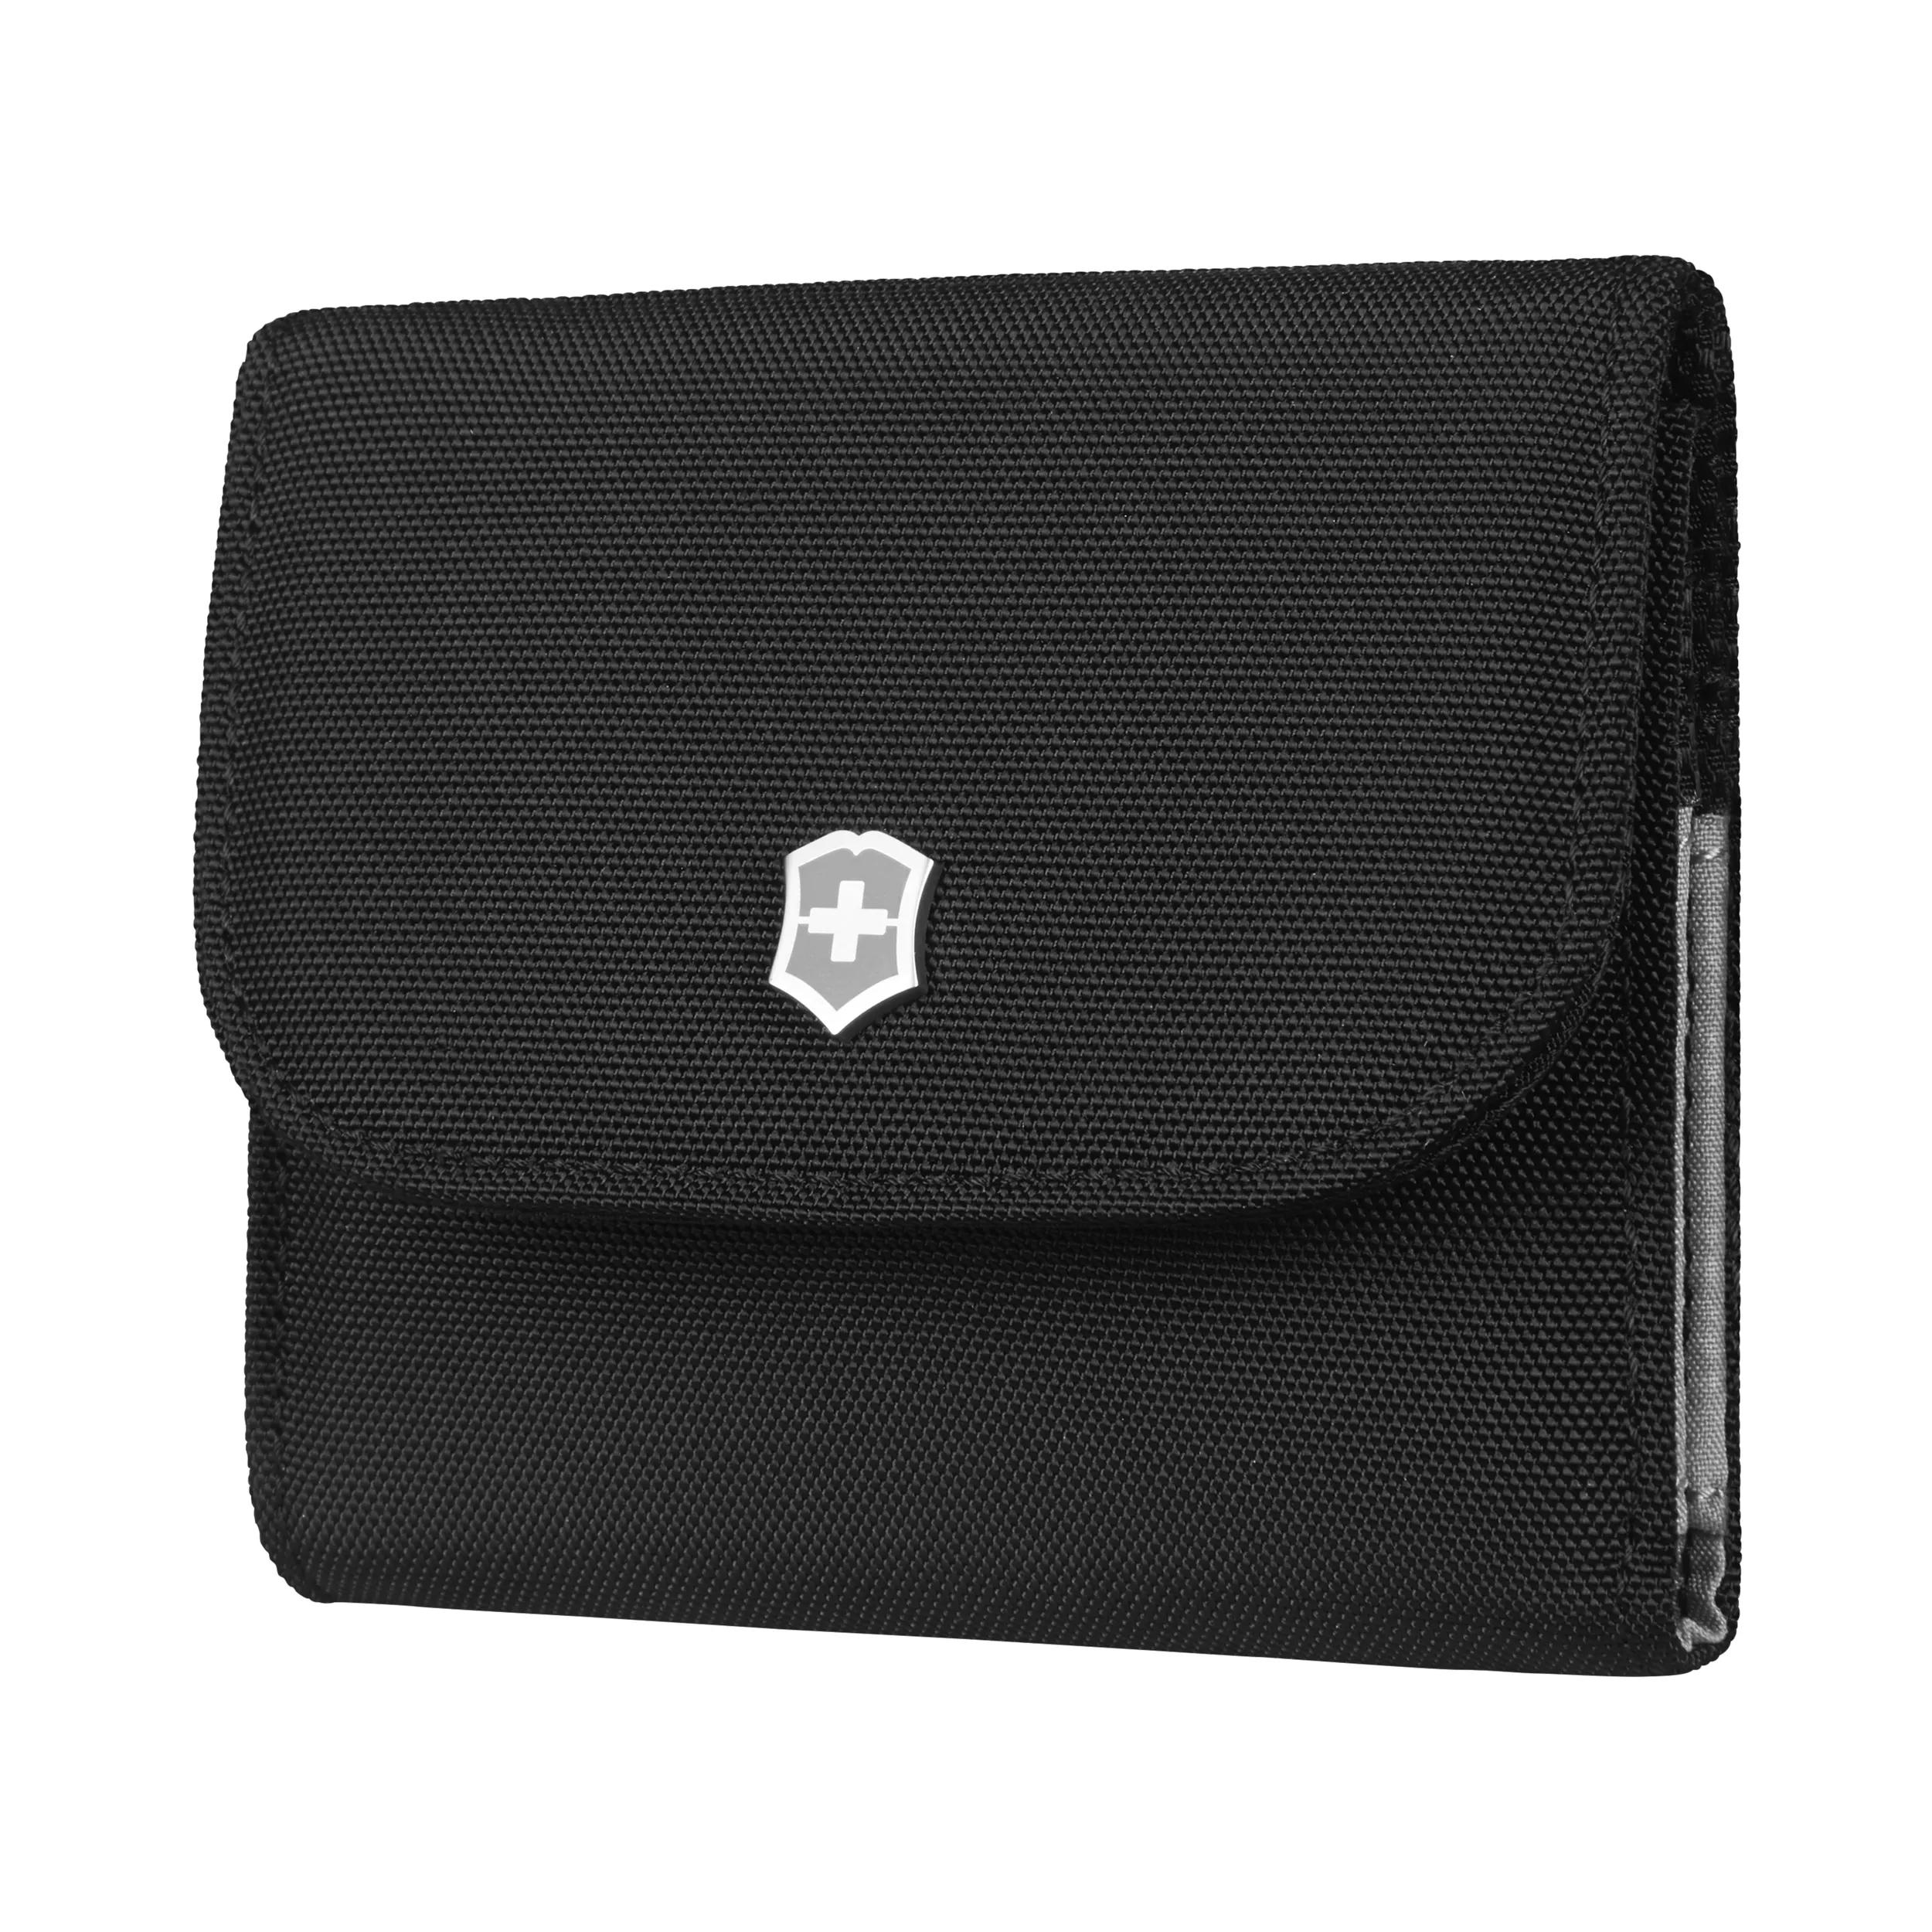 Victorinox Travel Accessories EXT Envelope Wallet in black - 611973